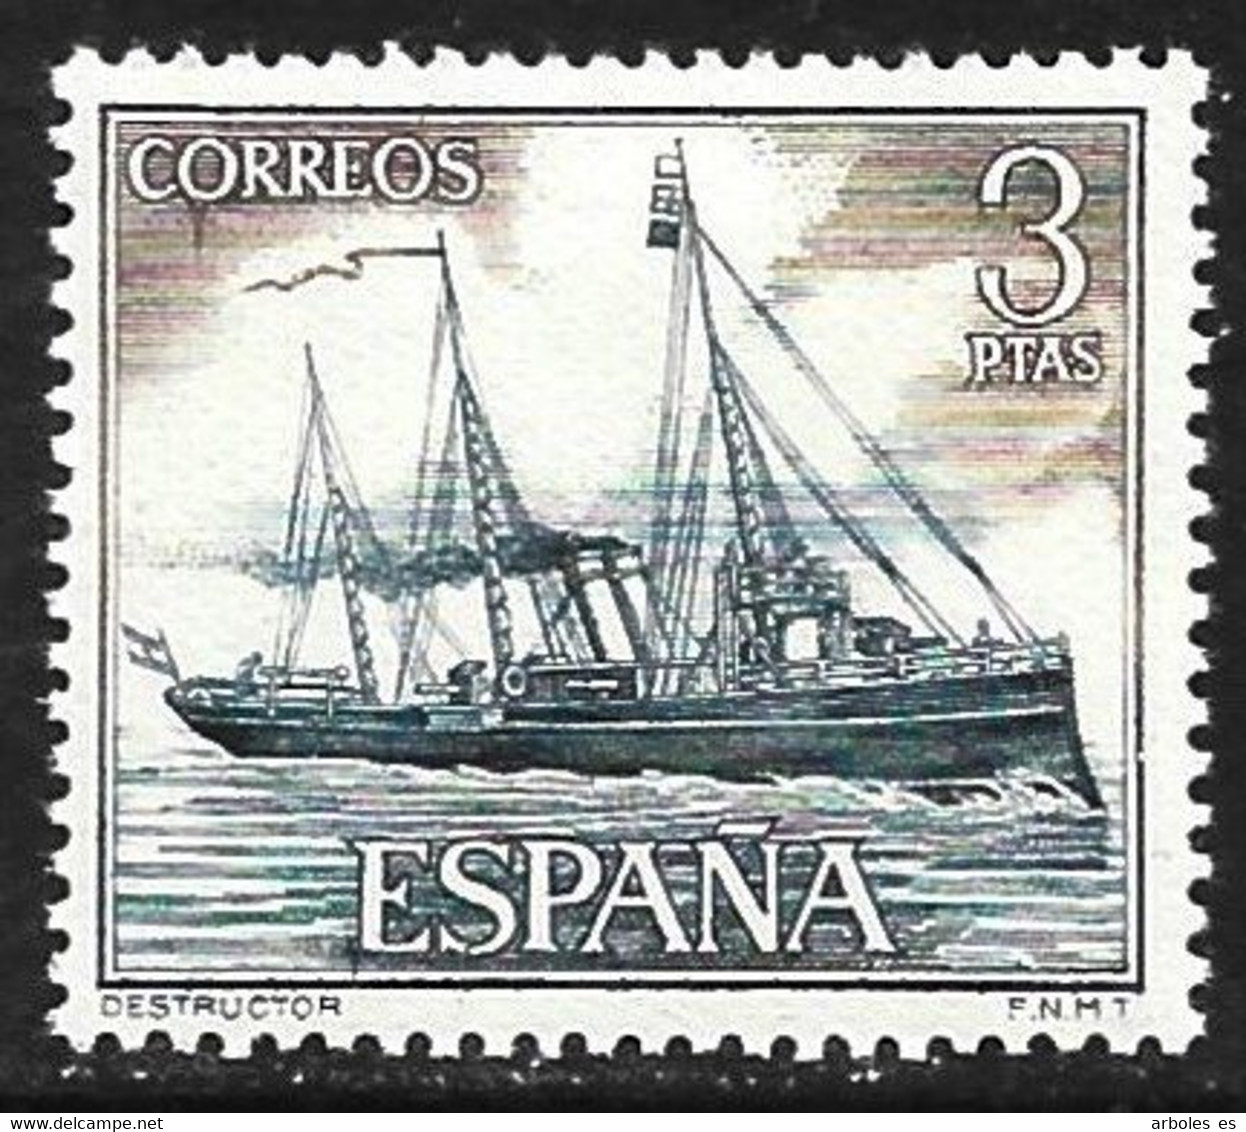 MARINA ESPAÑOLA - AÑO 1964 - Nº EDIFIL 1609ita - VARIEDAD - Variedades & Curiosidades